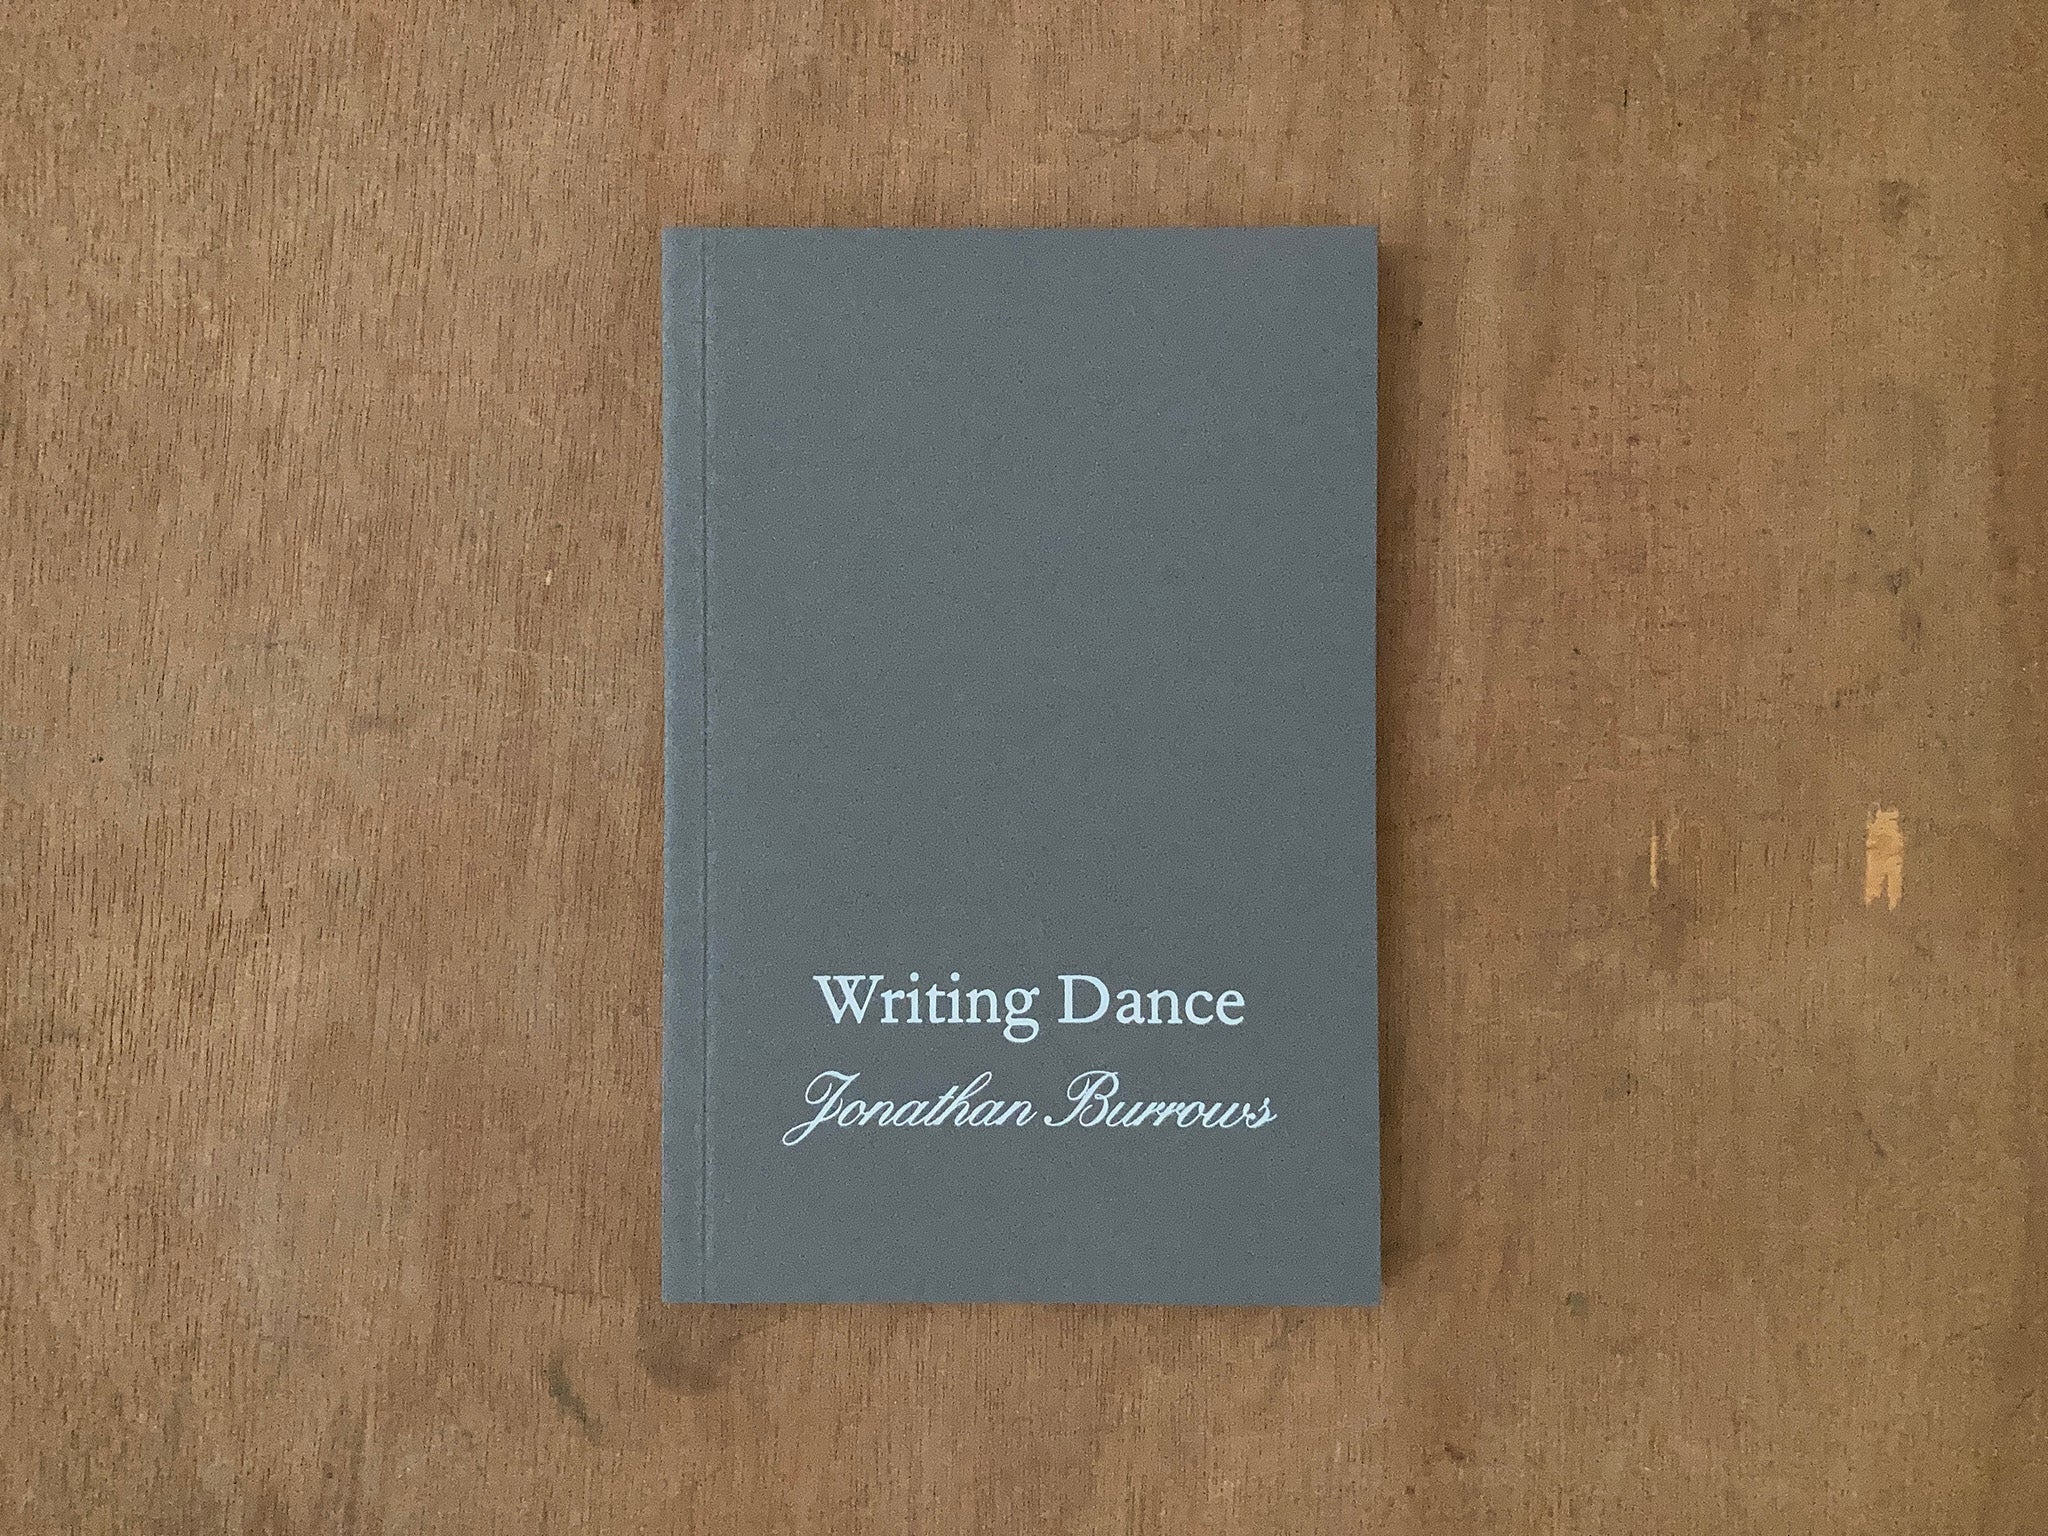 WRITING DANCE by Jonathan Burrows